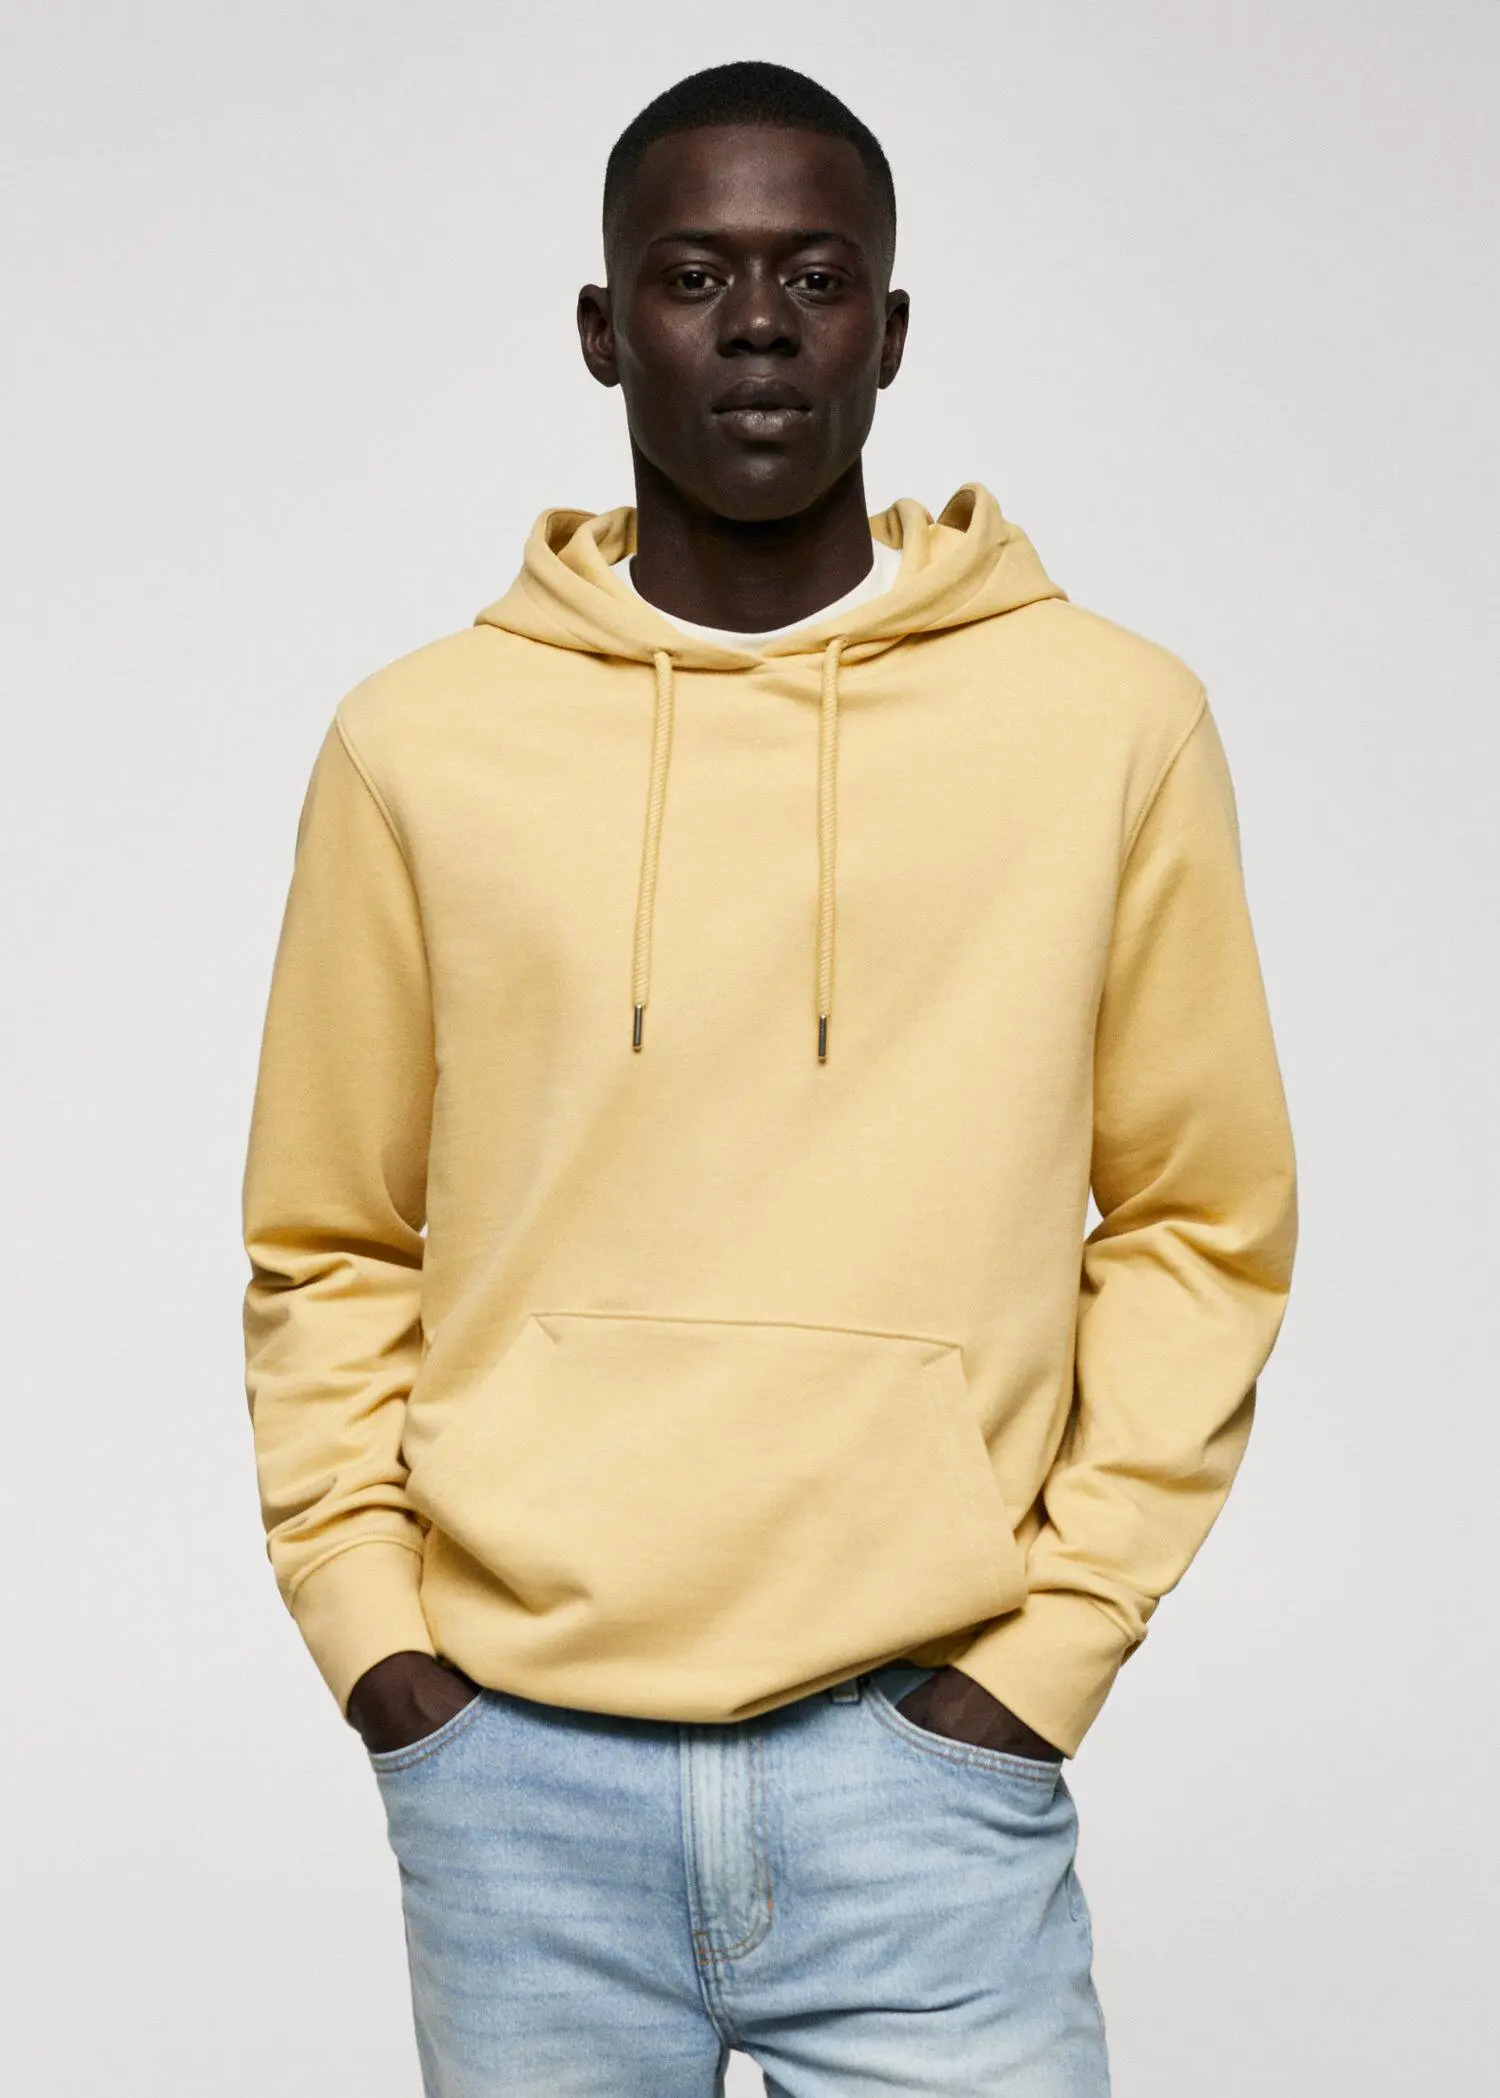 Mango Hoodie cotton sweatshirt. a man wearing a yellow hoodie and jeans. 